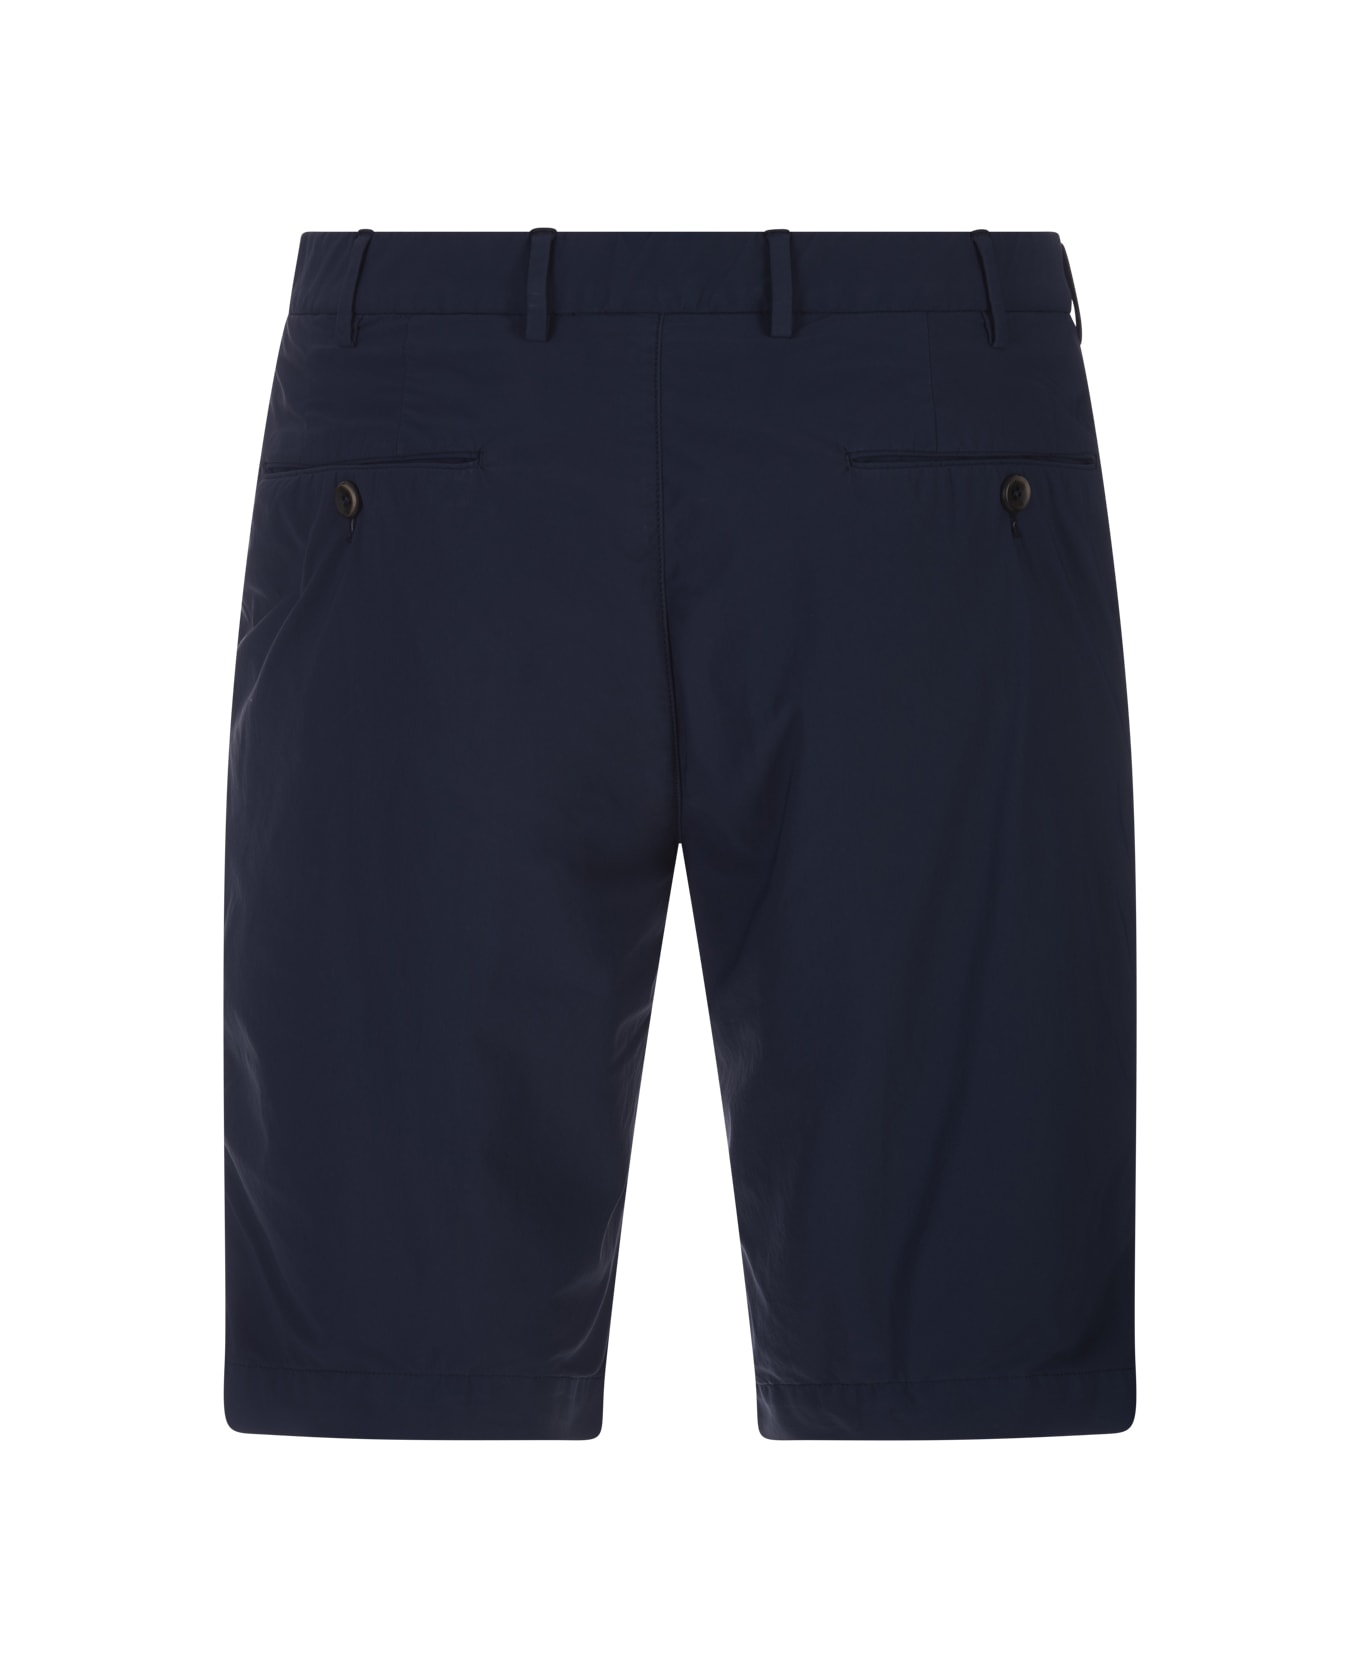 PT Bermuda Dark Blue Stretch Cotton Shorts - Blue